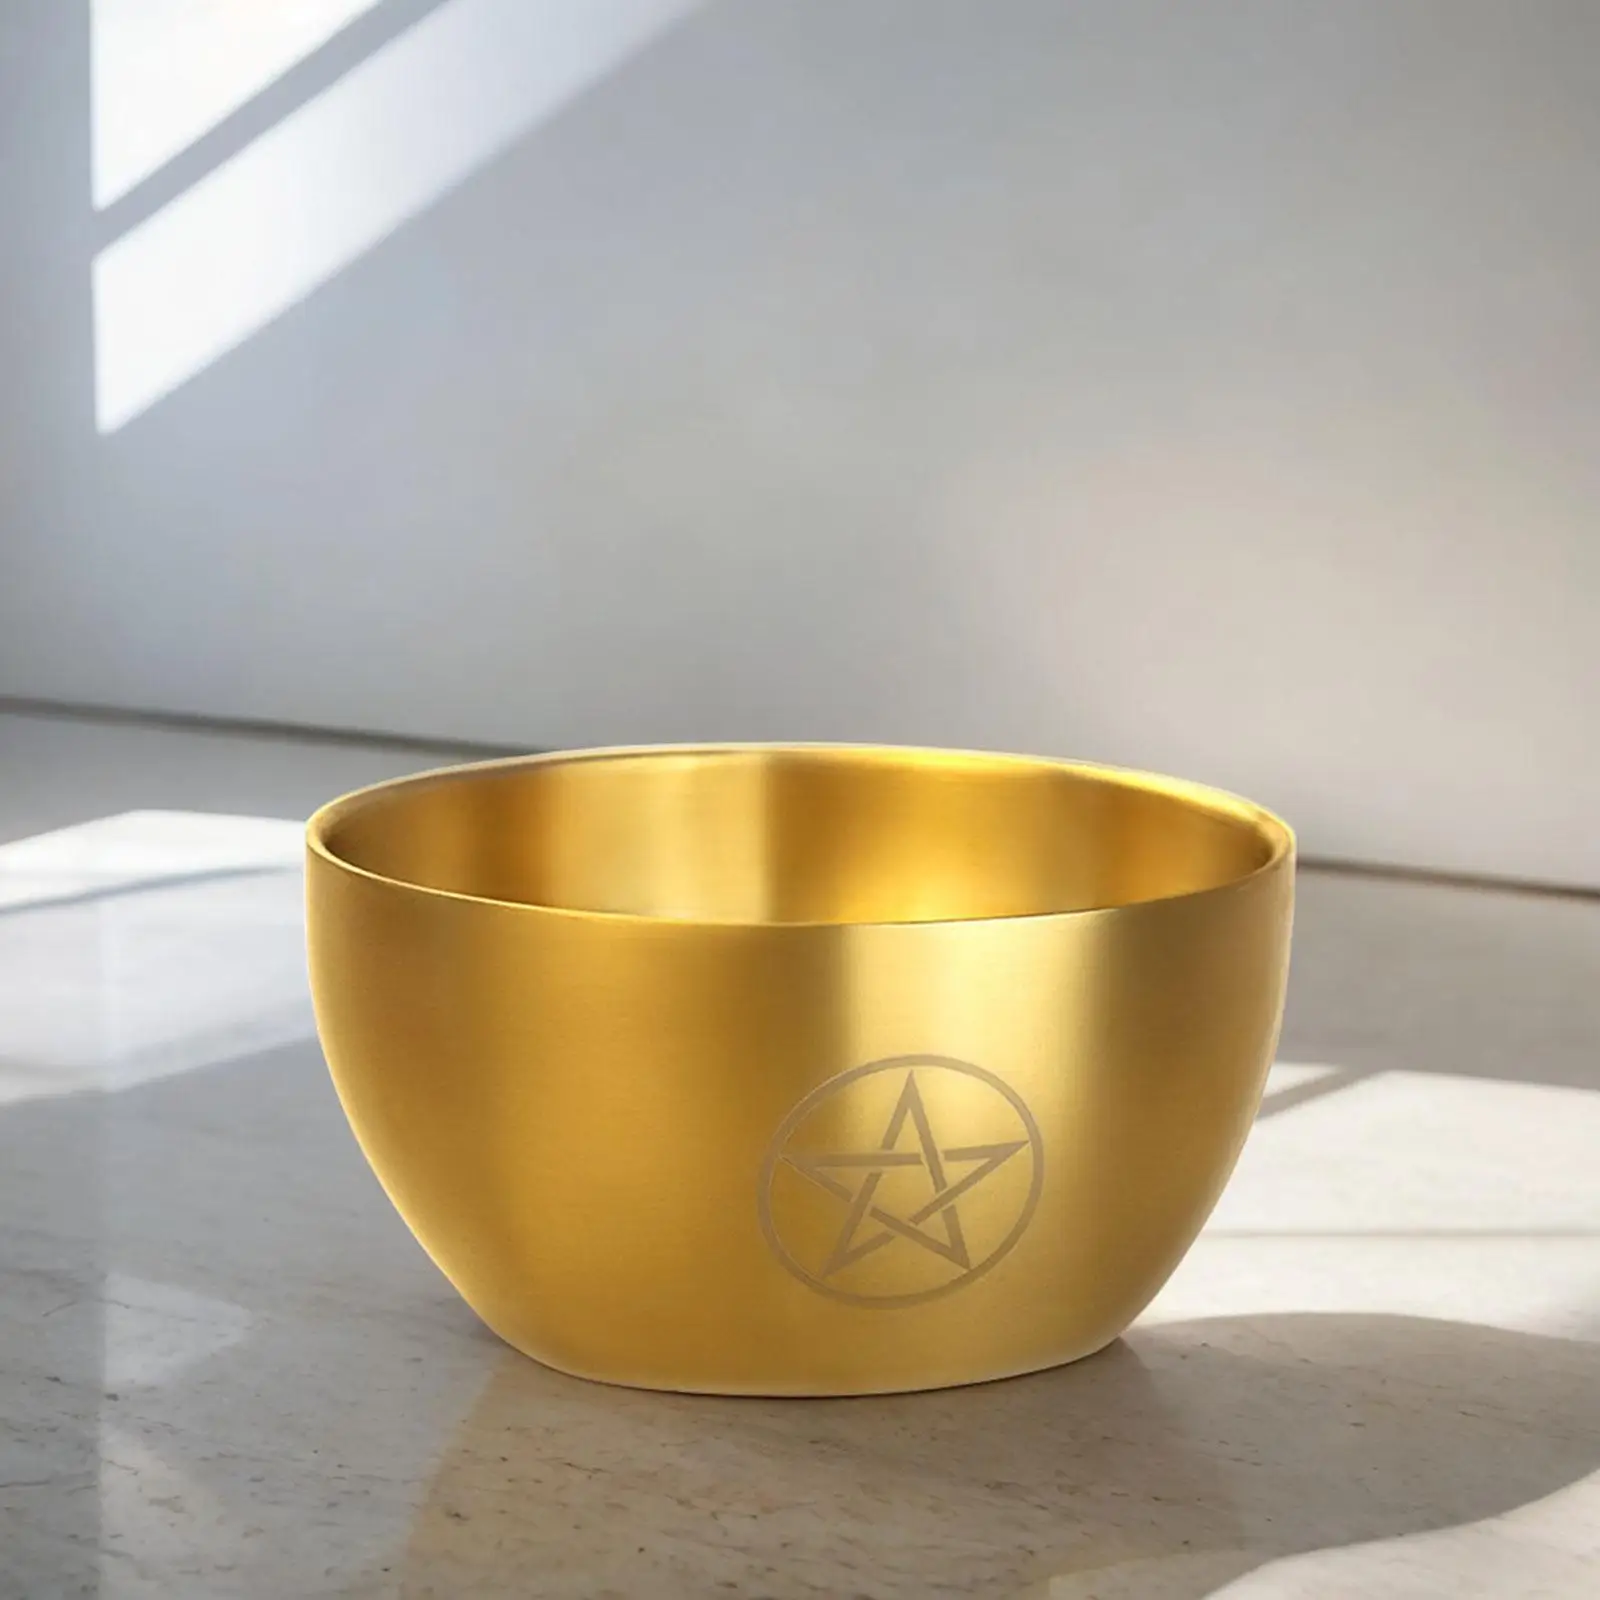 Yoga Meditation Bowl Smudging Bowl Buddha Worship Supplies Hand Carved Altar Ritual Smudging Decoration Pentagram Offering Bowl